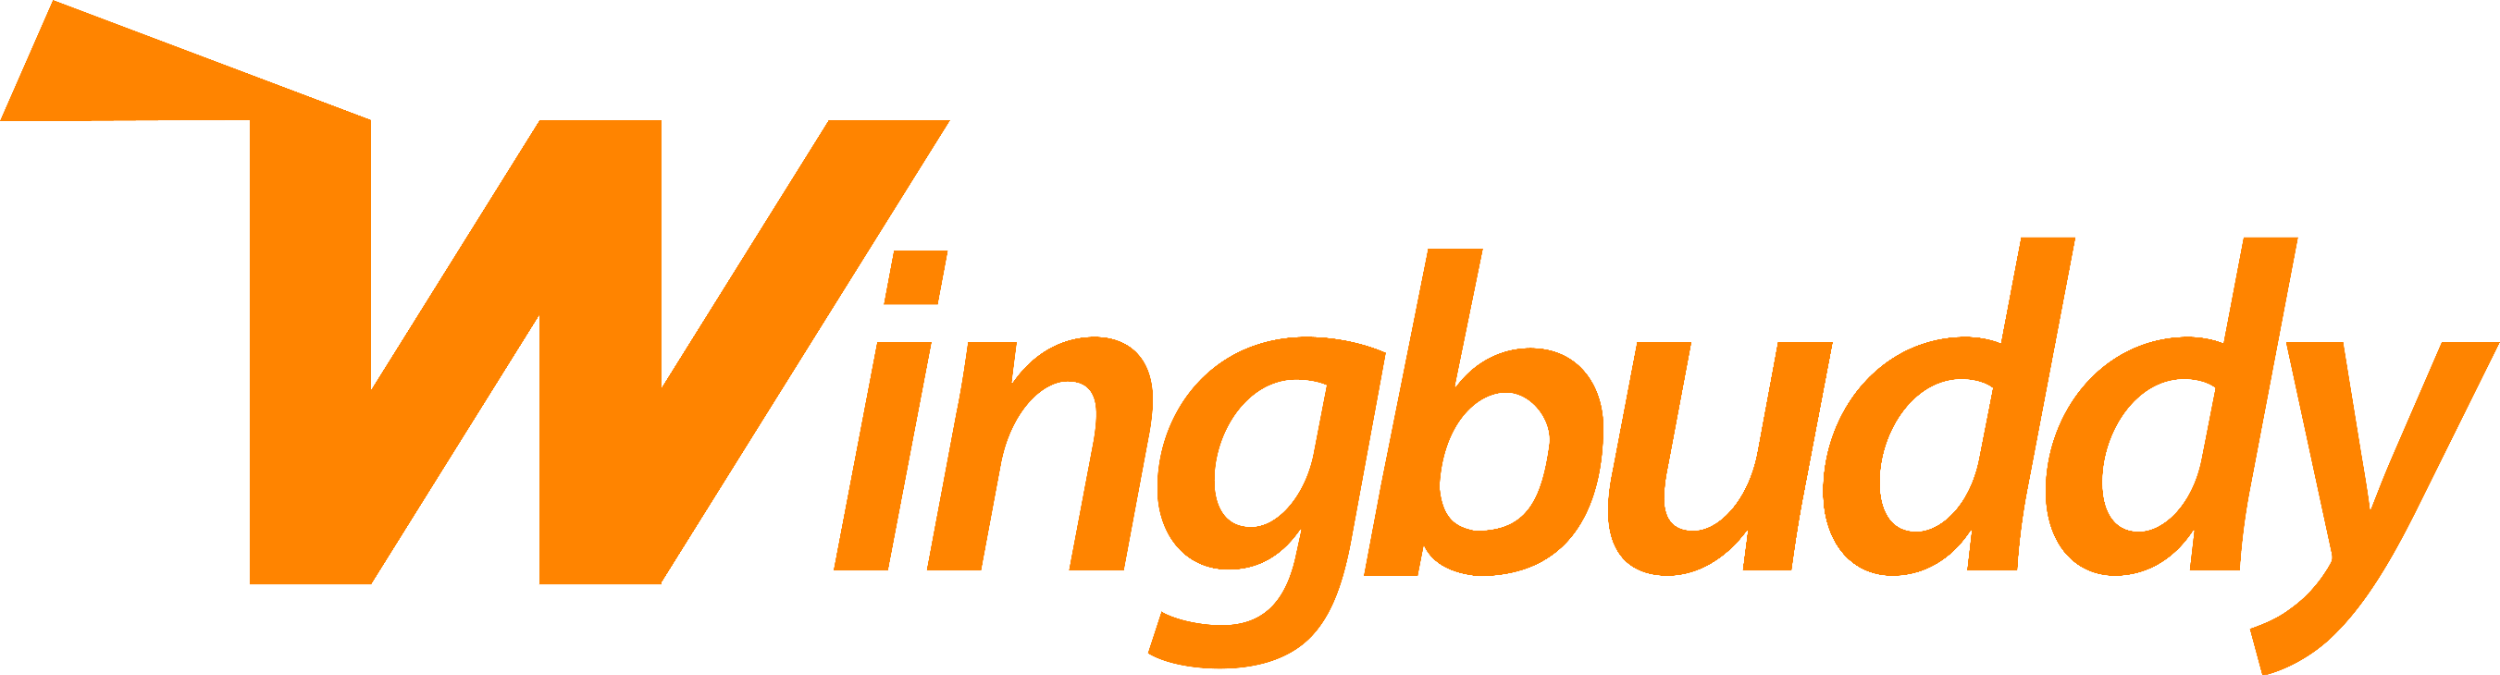 Negative Logo Orange